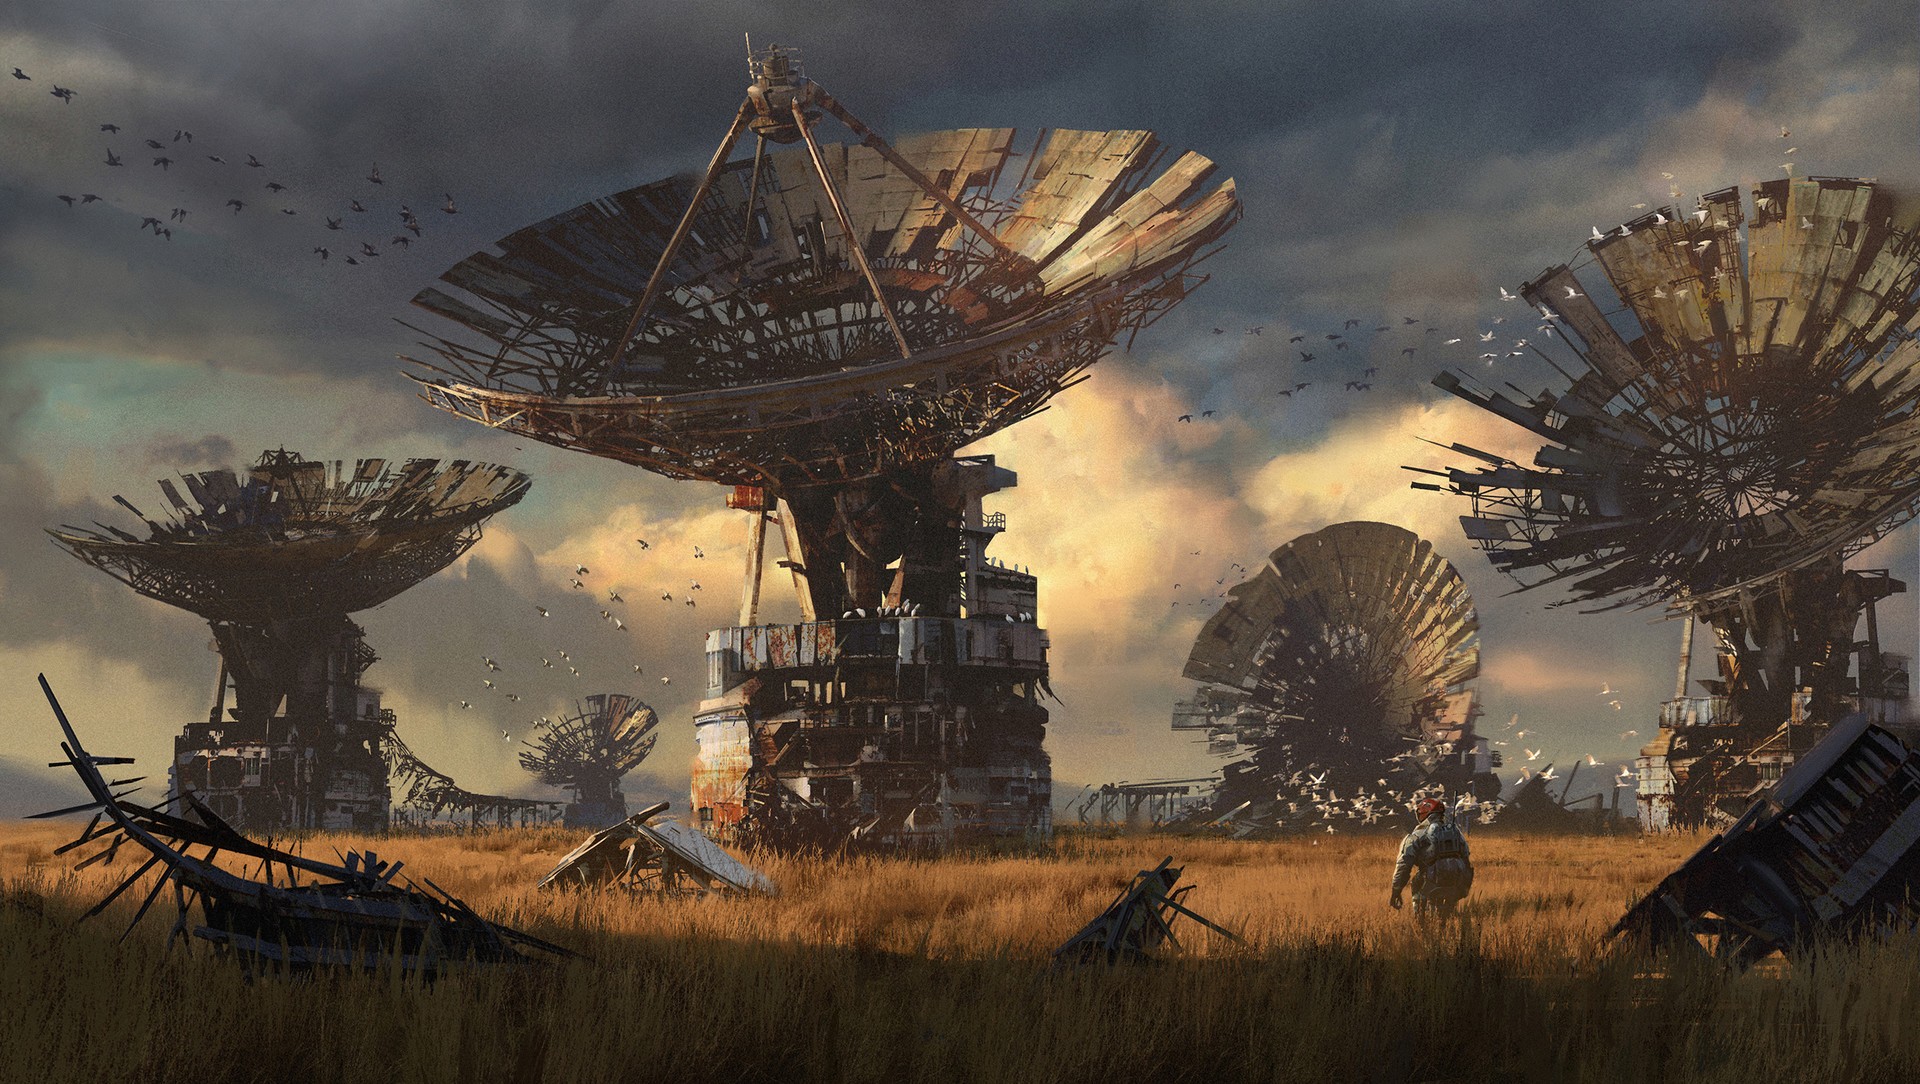 General 1920x1084 artwork digital art concept art satellite apocalyptic ruins birds sky